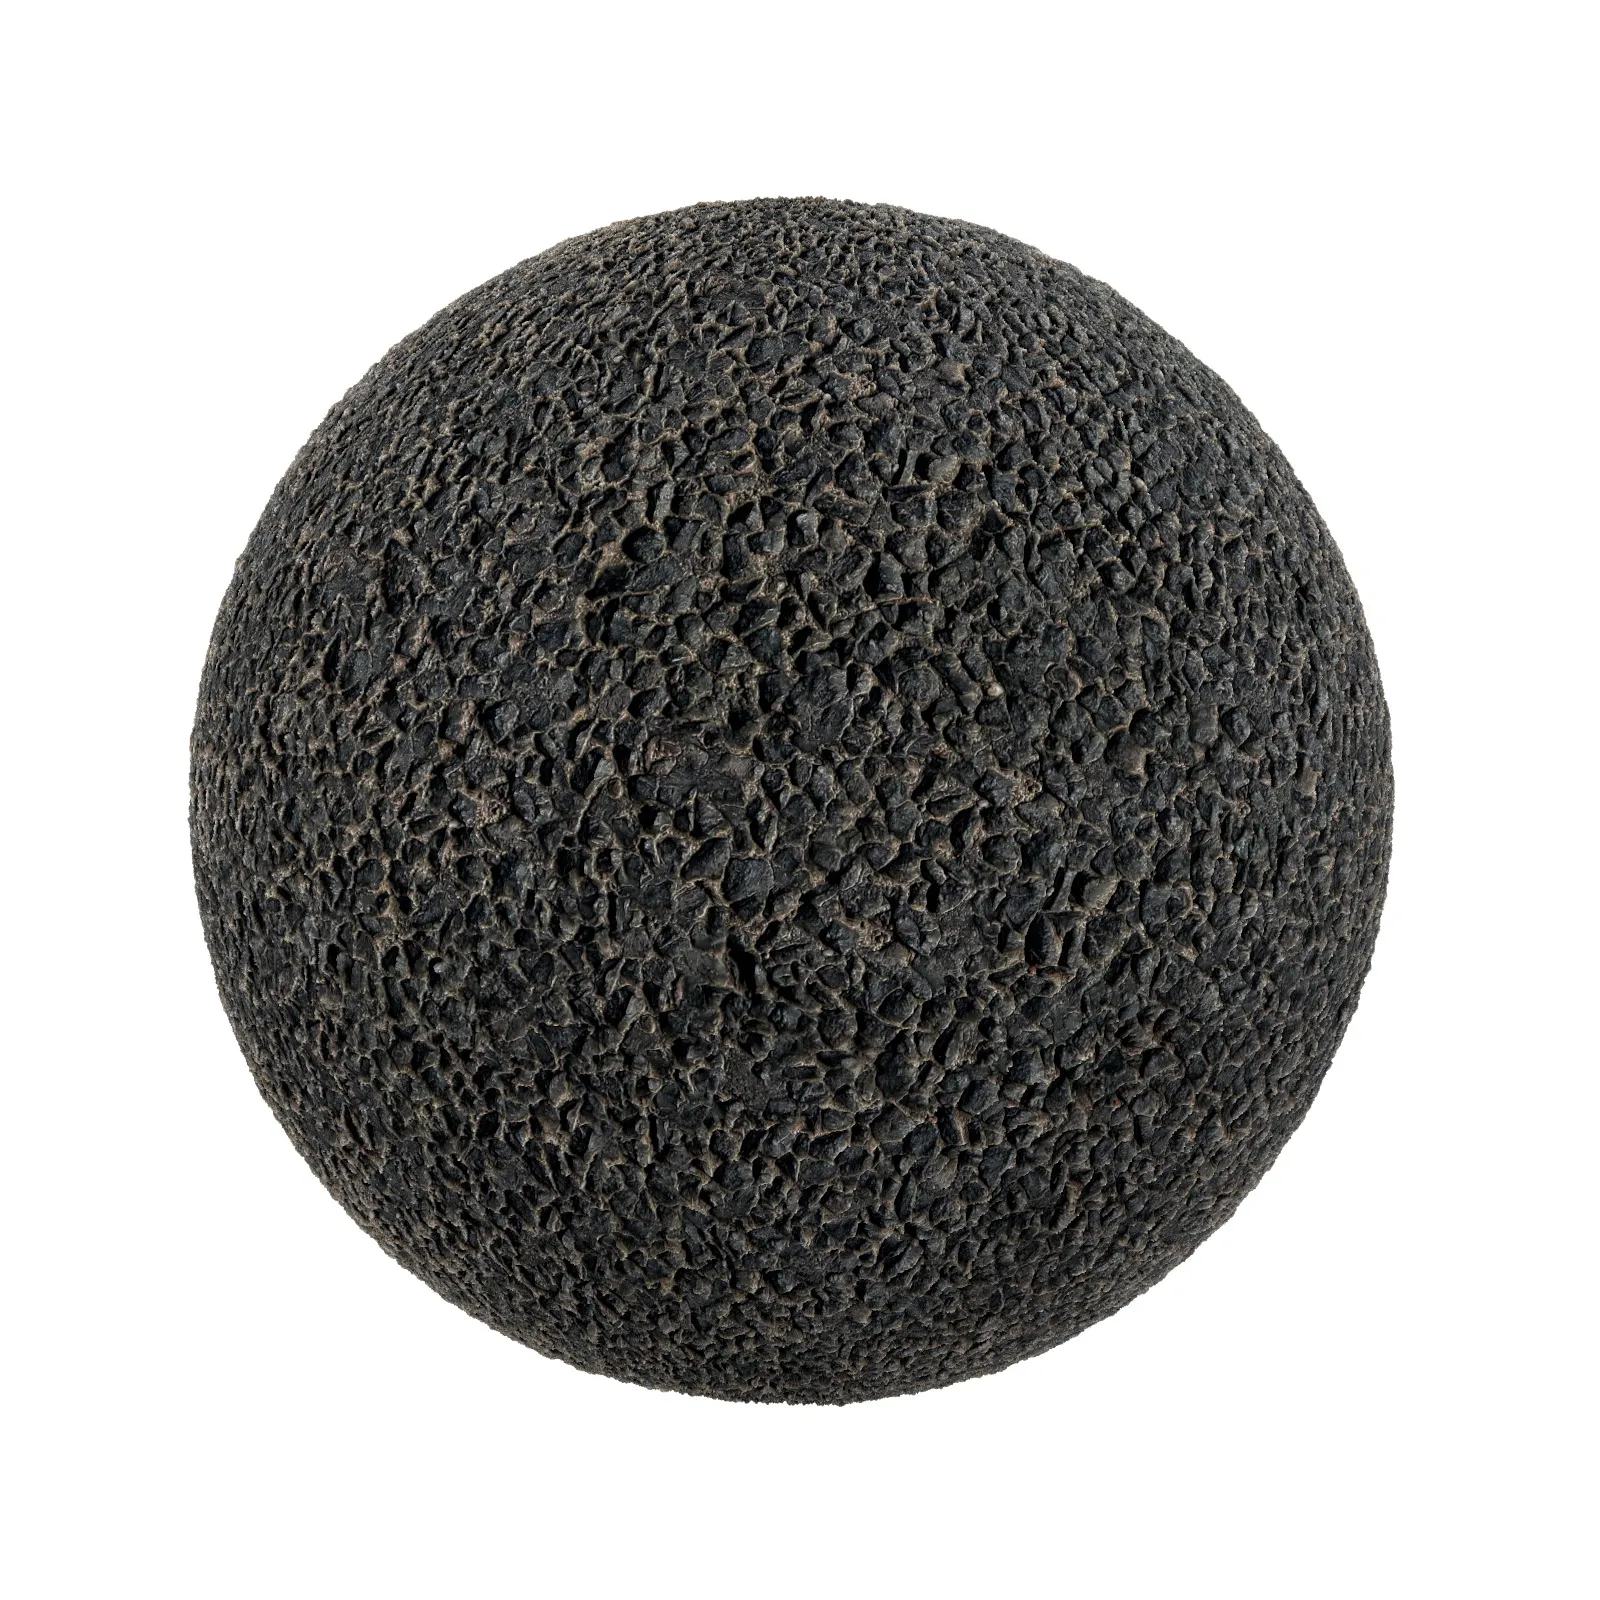 TEXTURES – STONES – CGAxis PBR Colection Vol 1 Stones – black gravel